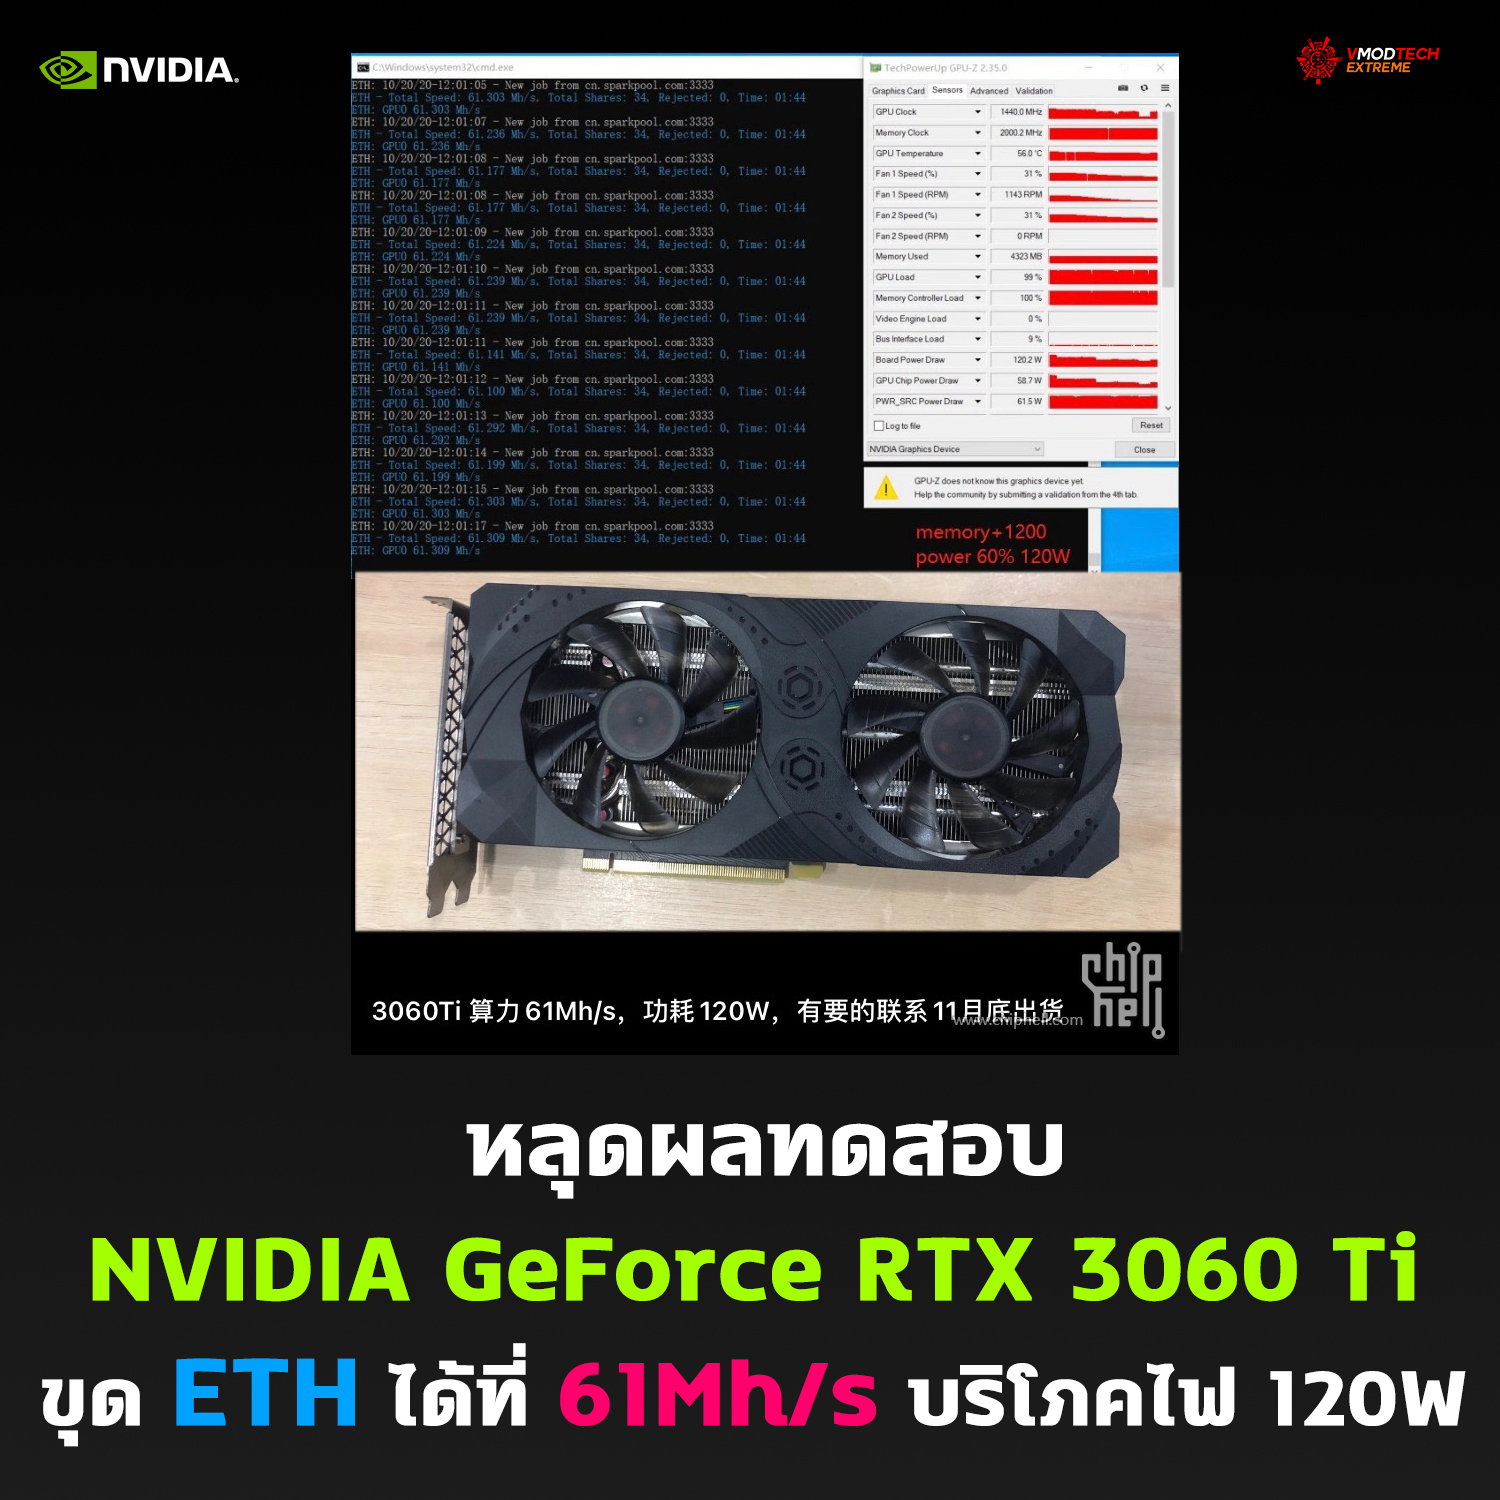 nvidia geforce rtx 3060 ti eth หลุดผลทดสอบ NVIDIA GeForce RTX 3060 Ti ขุด ETH ได้ที่ 61Mh/s 